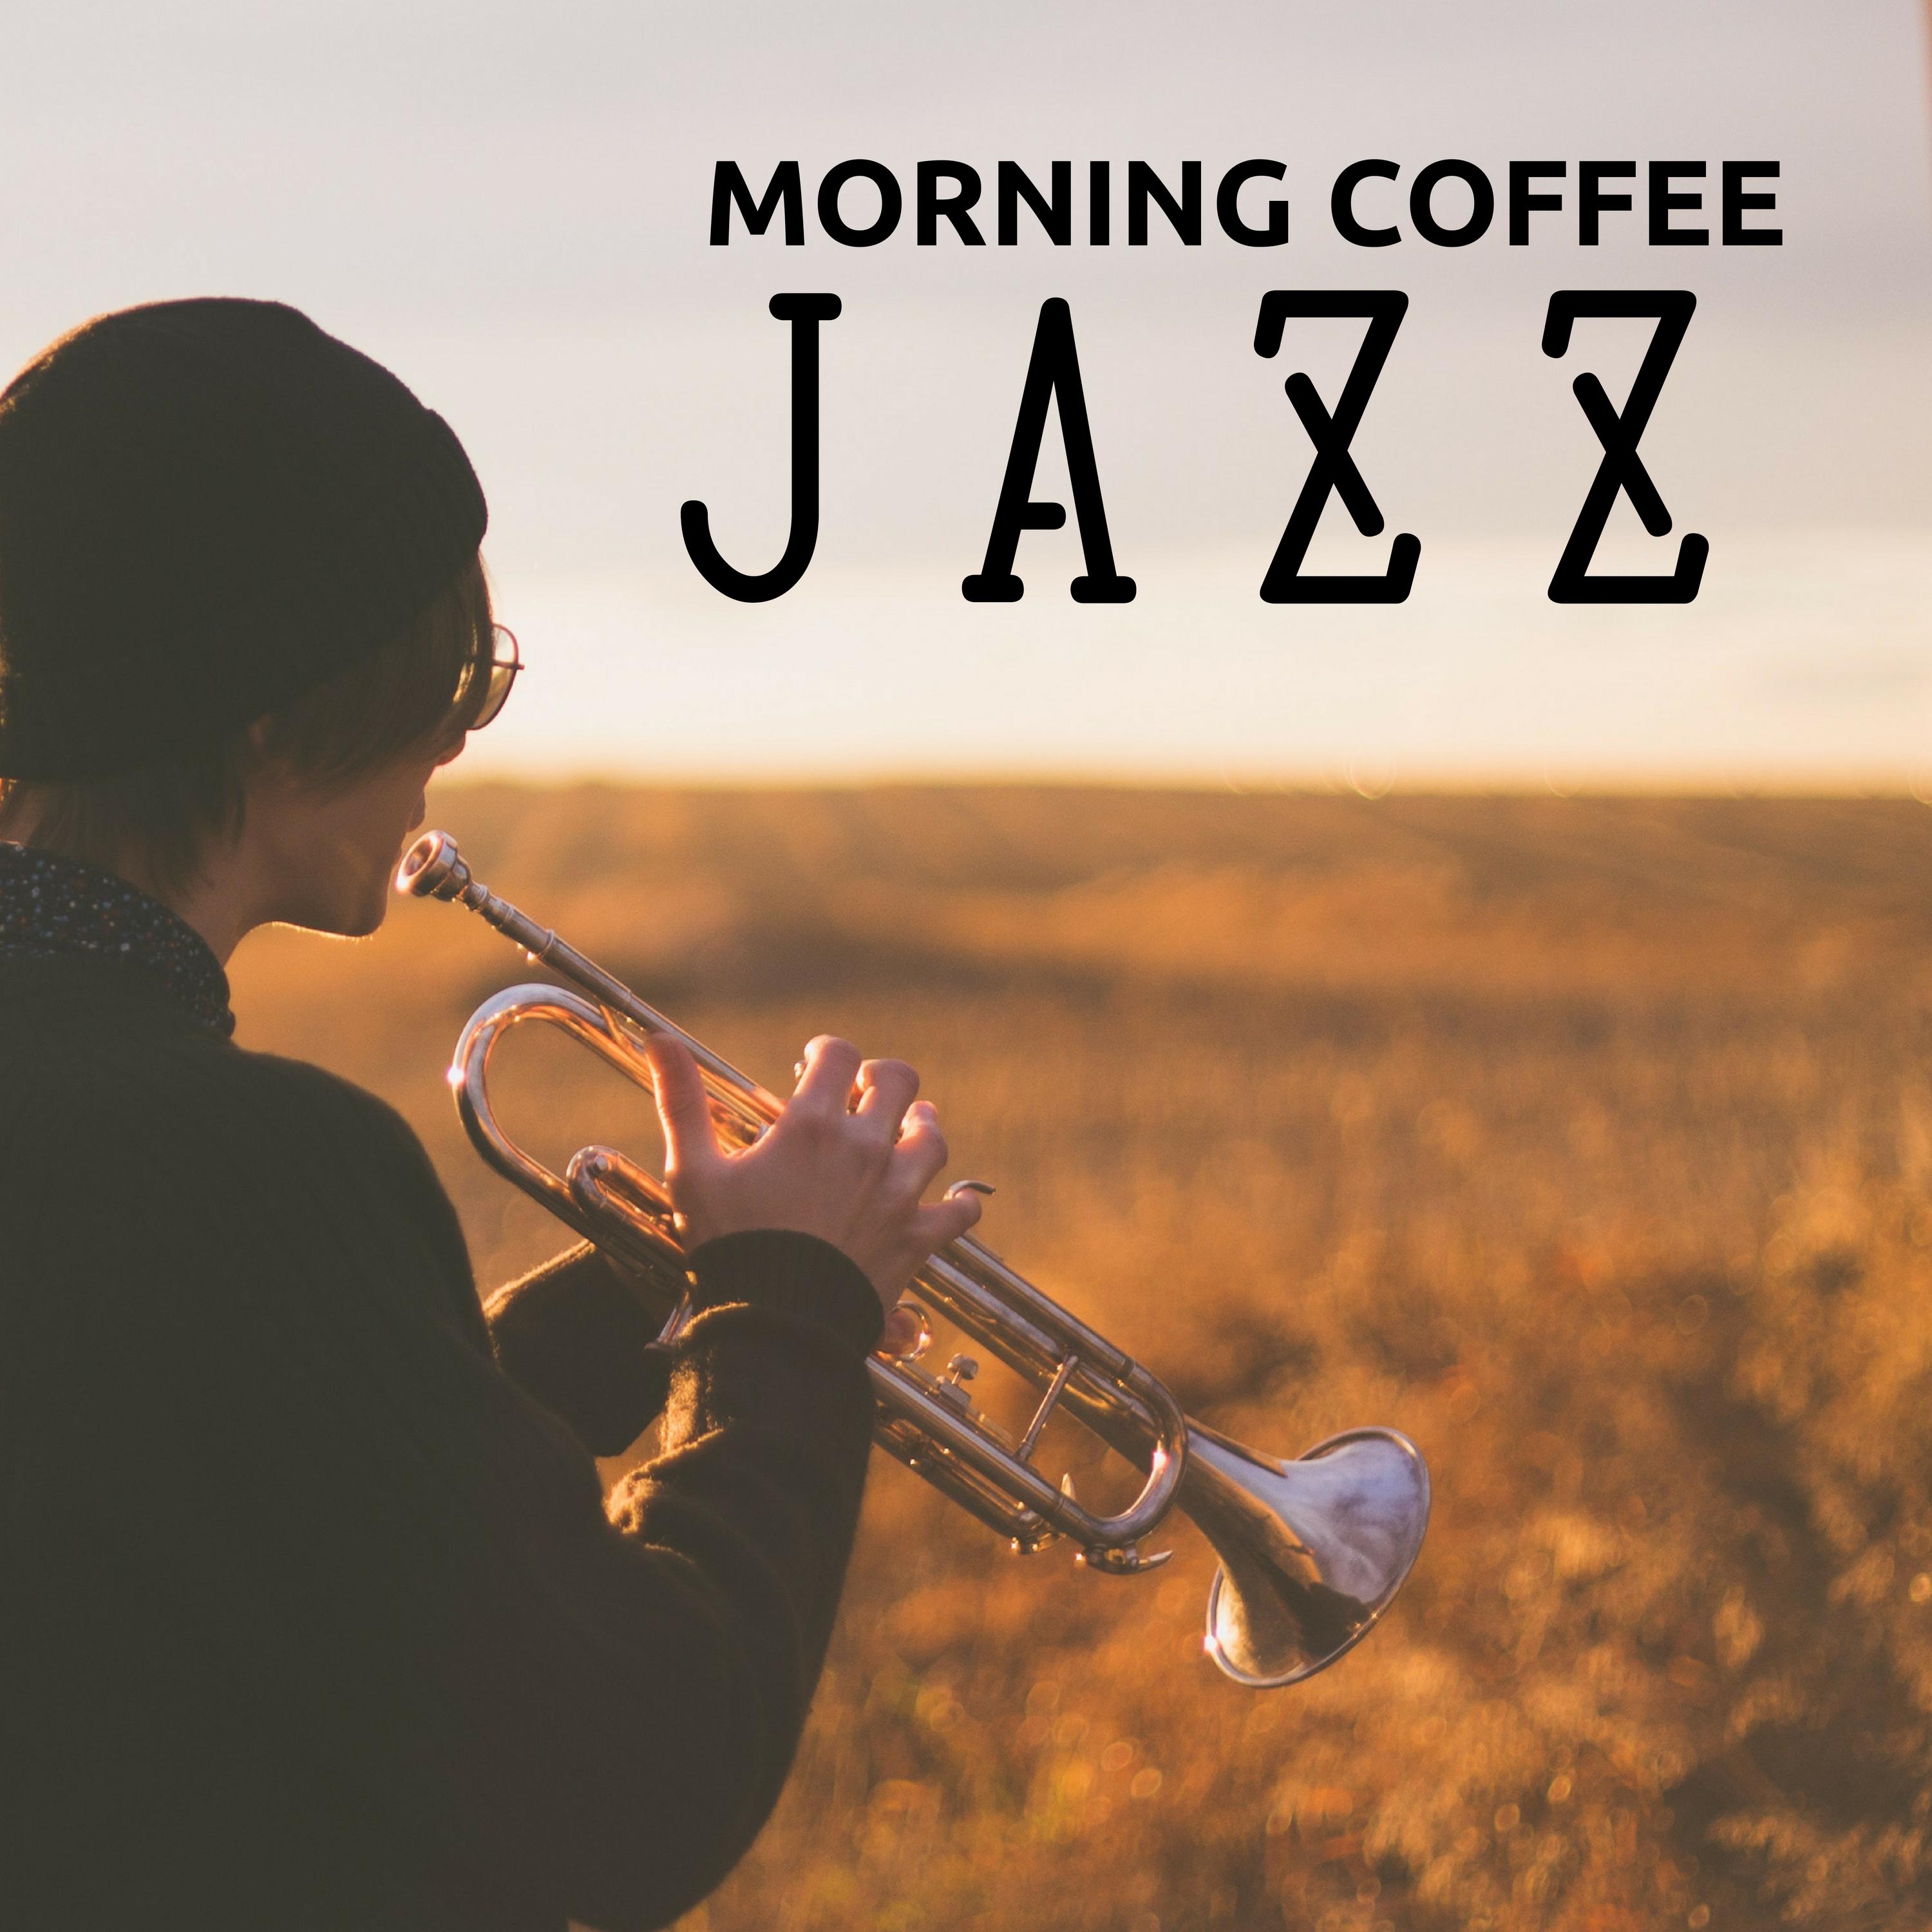 Morning Coffee Jazz